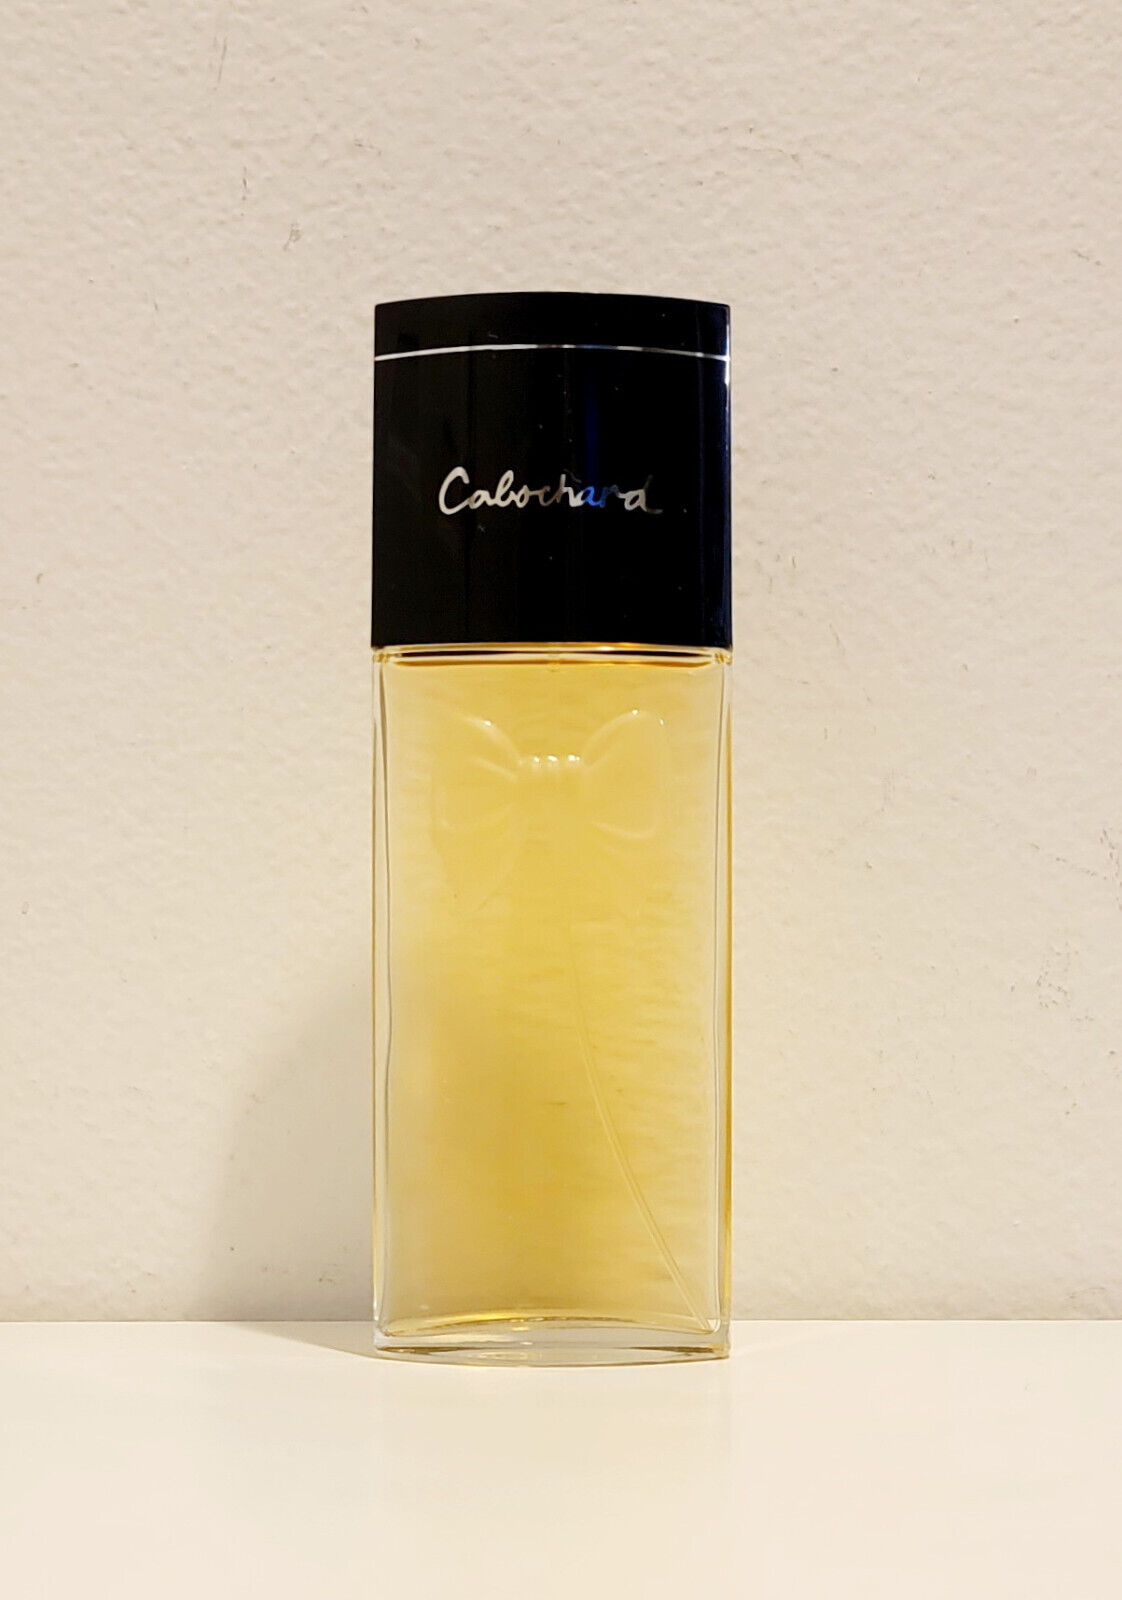 Cabochard by Parfums Gres 3.4 oz / 100 ml edt spy perfume women femme rare